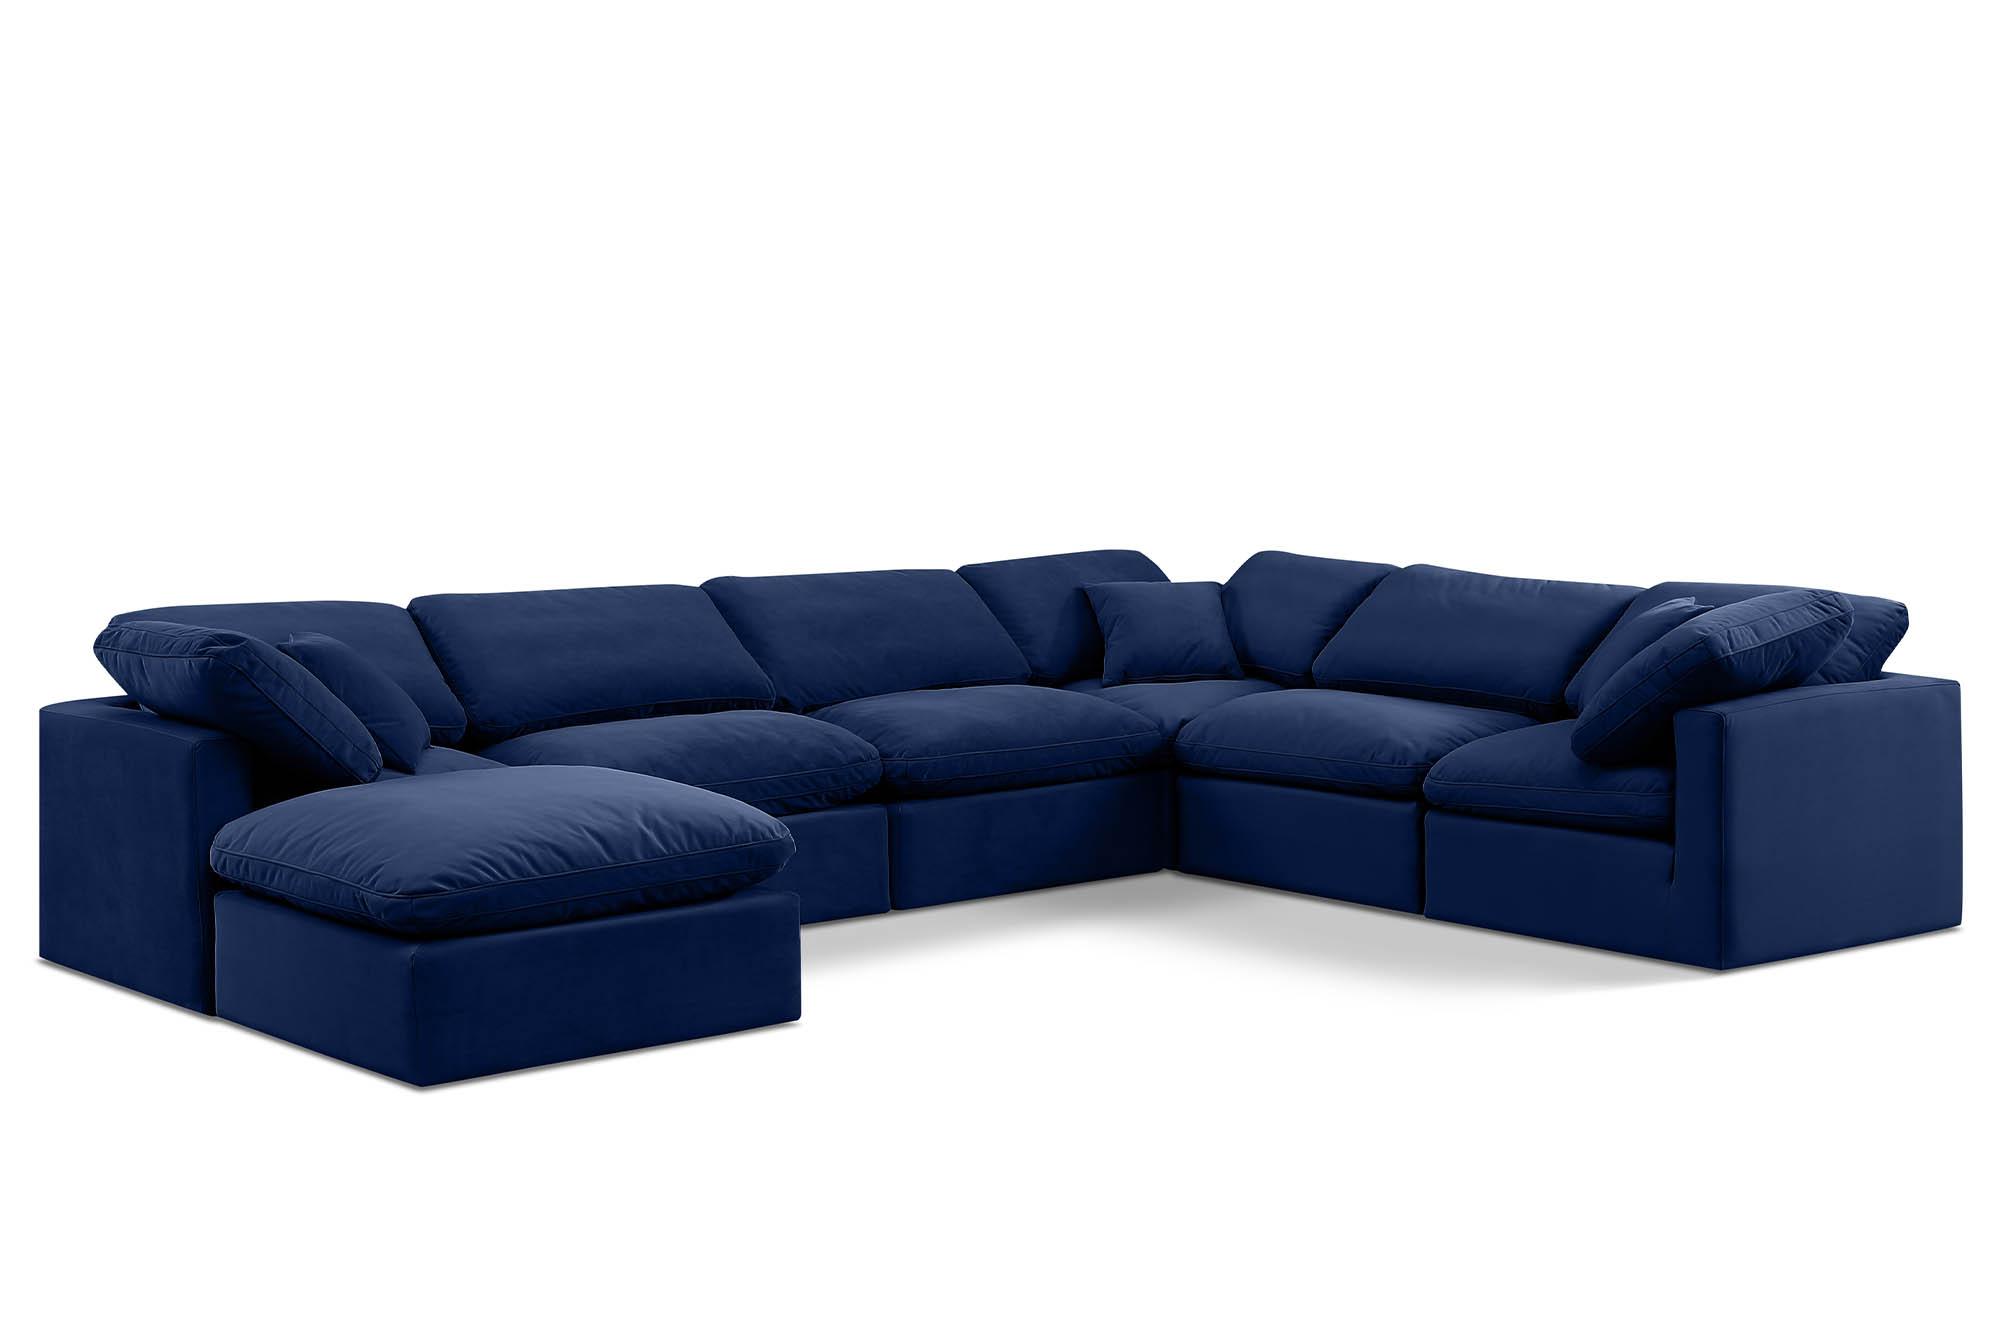 Contemporary, Modern Modular Sectional Sofa INDULGE 147Navy-Sec7A 147Navy-Sec7A in Navy Velvet